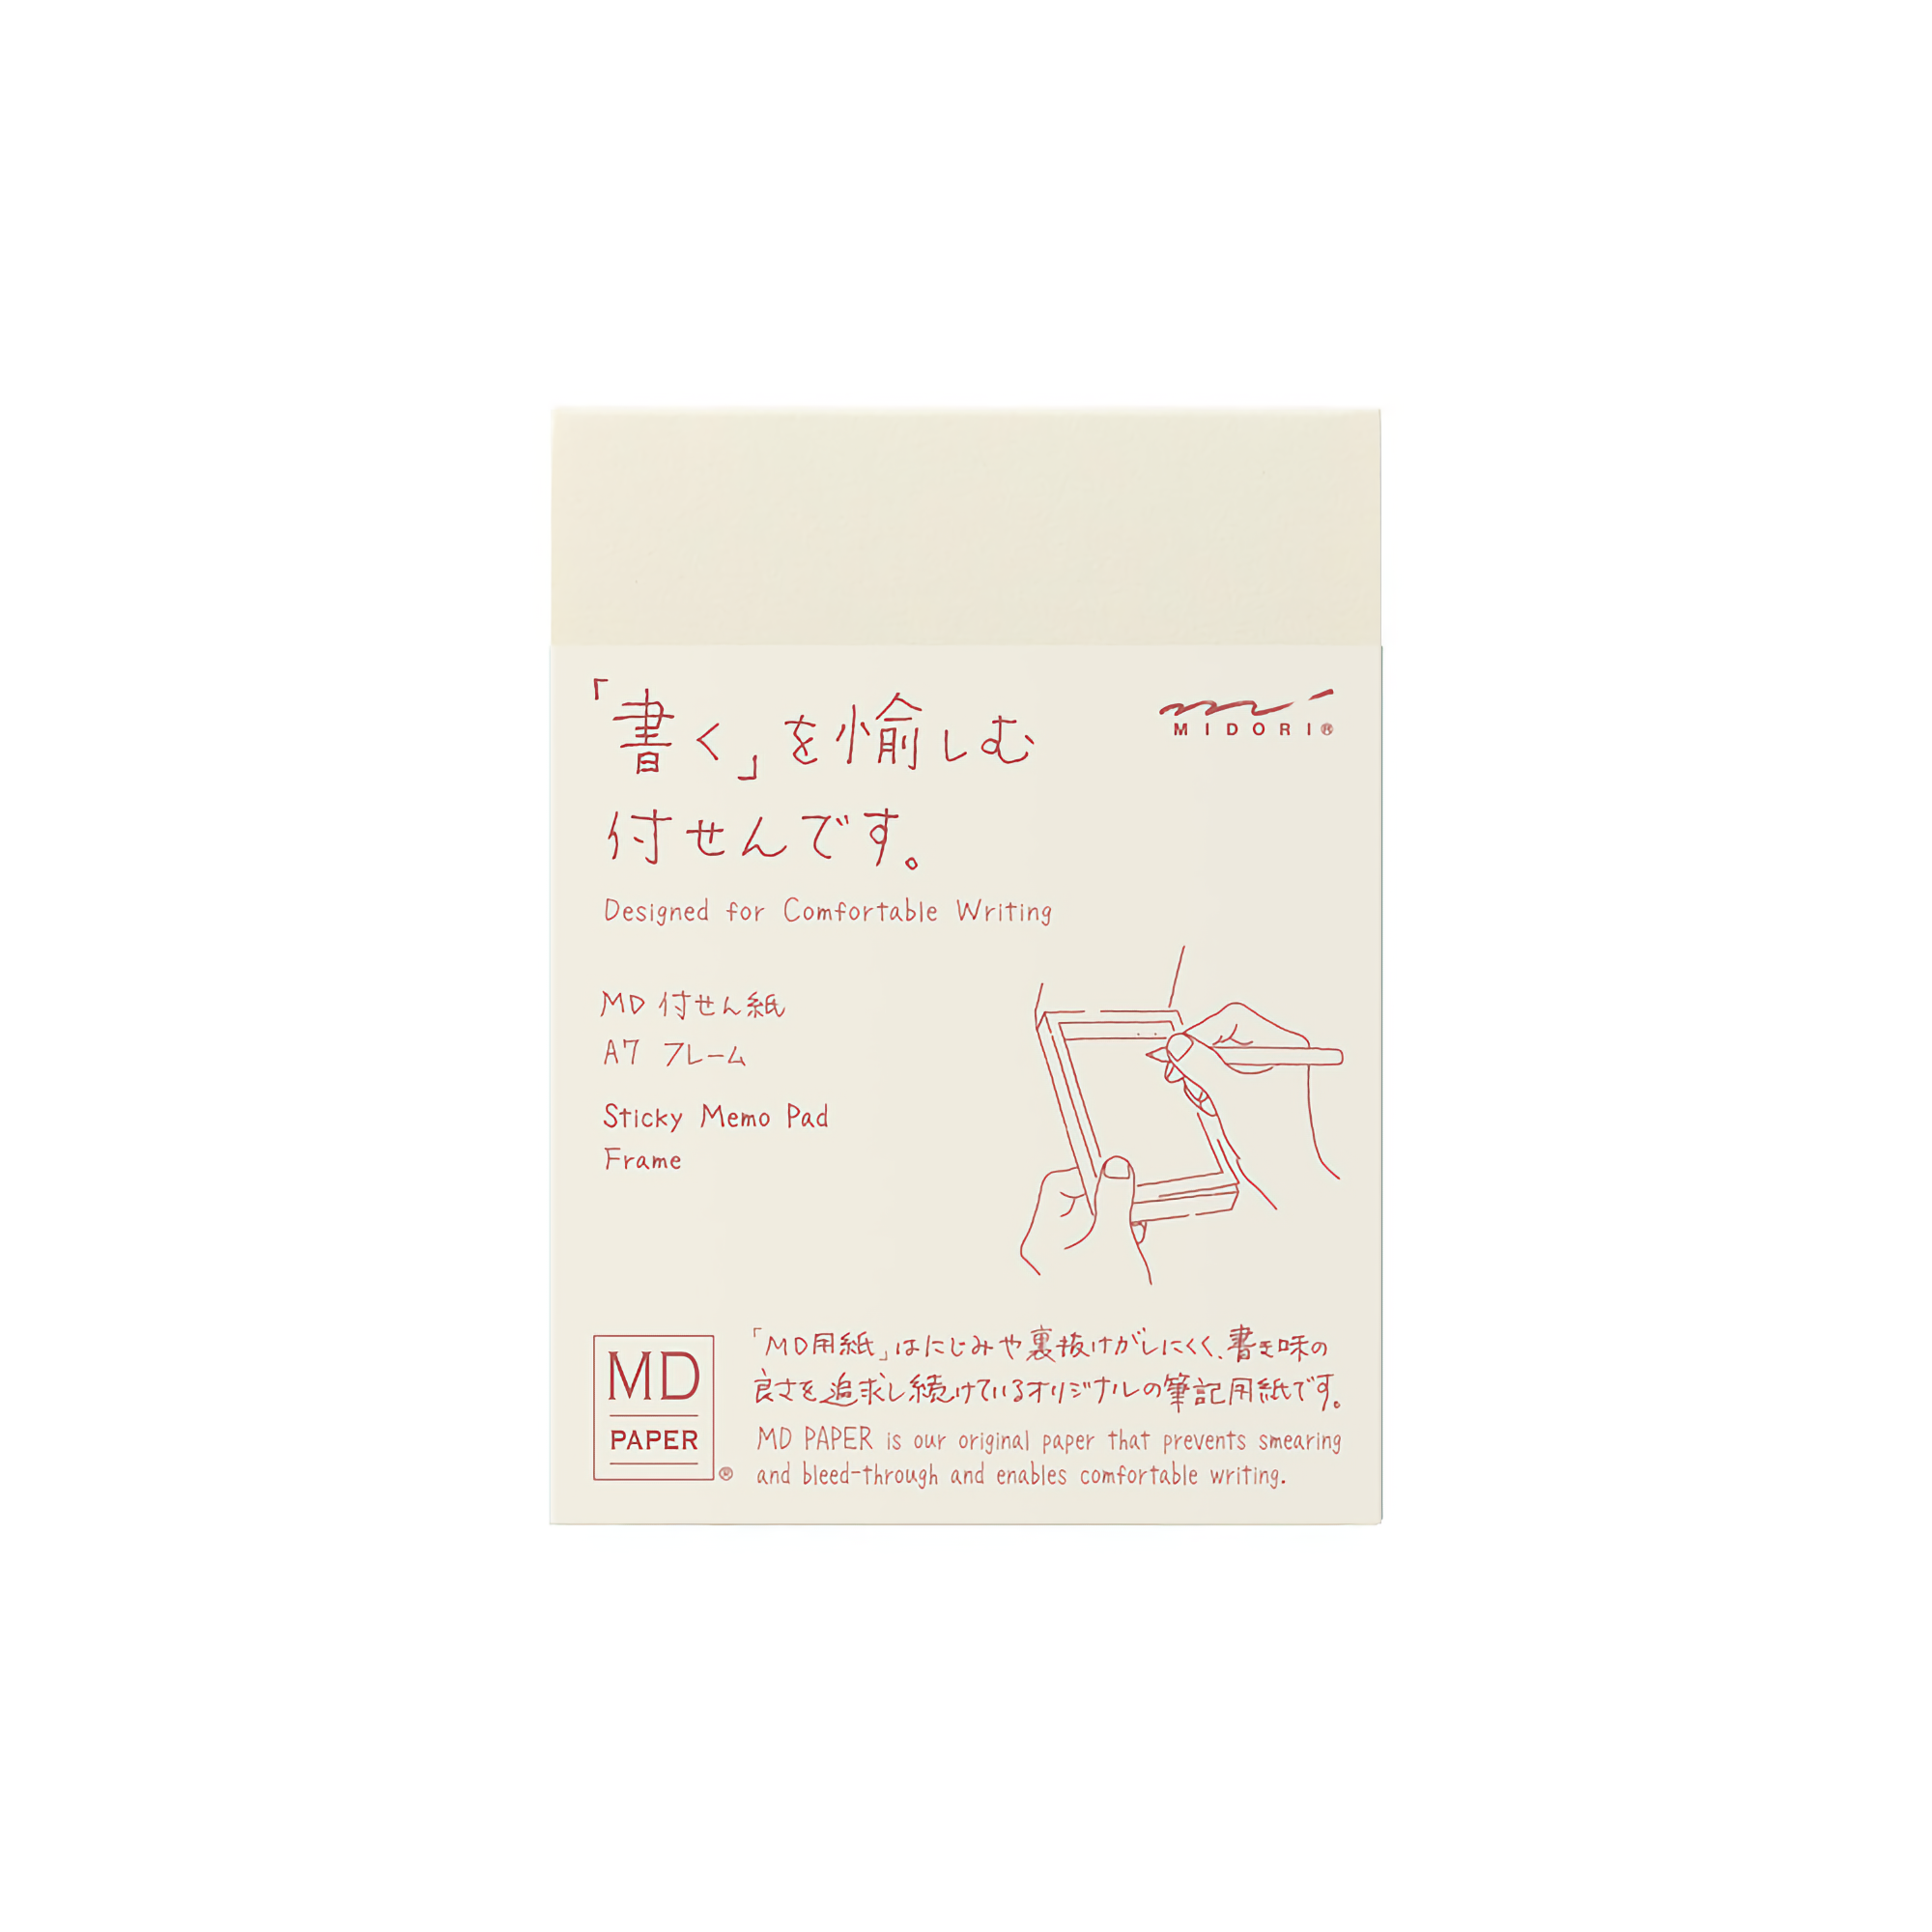 Midori MD Sticky Memo Pad [A7] Frame